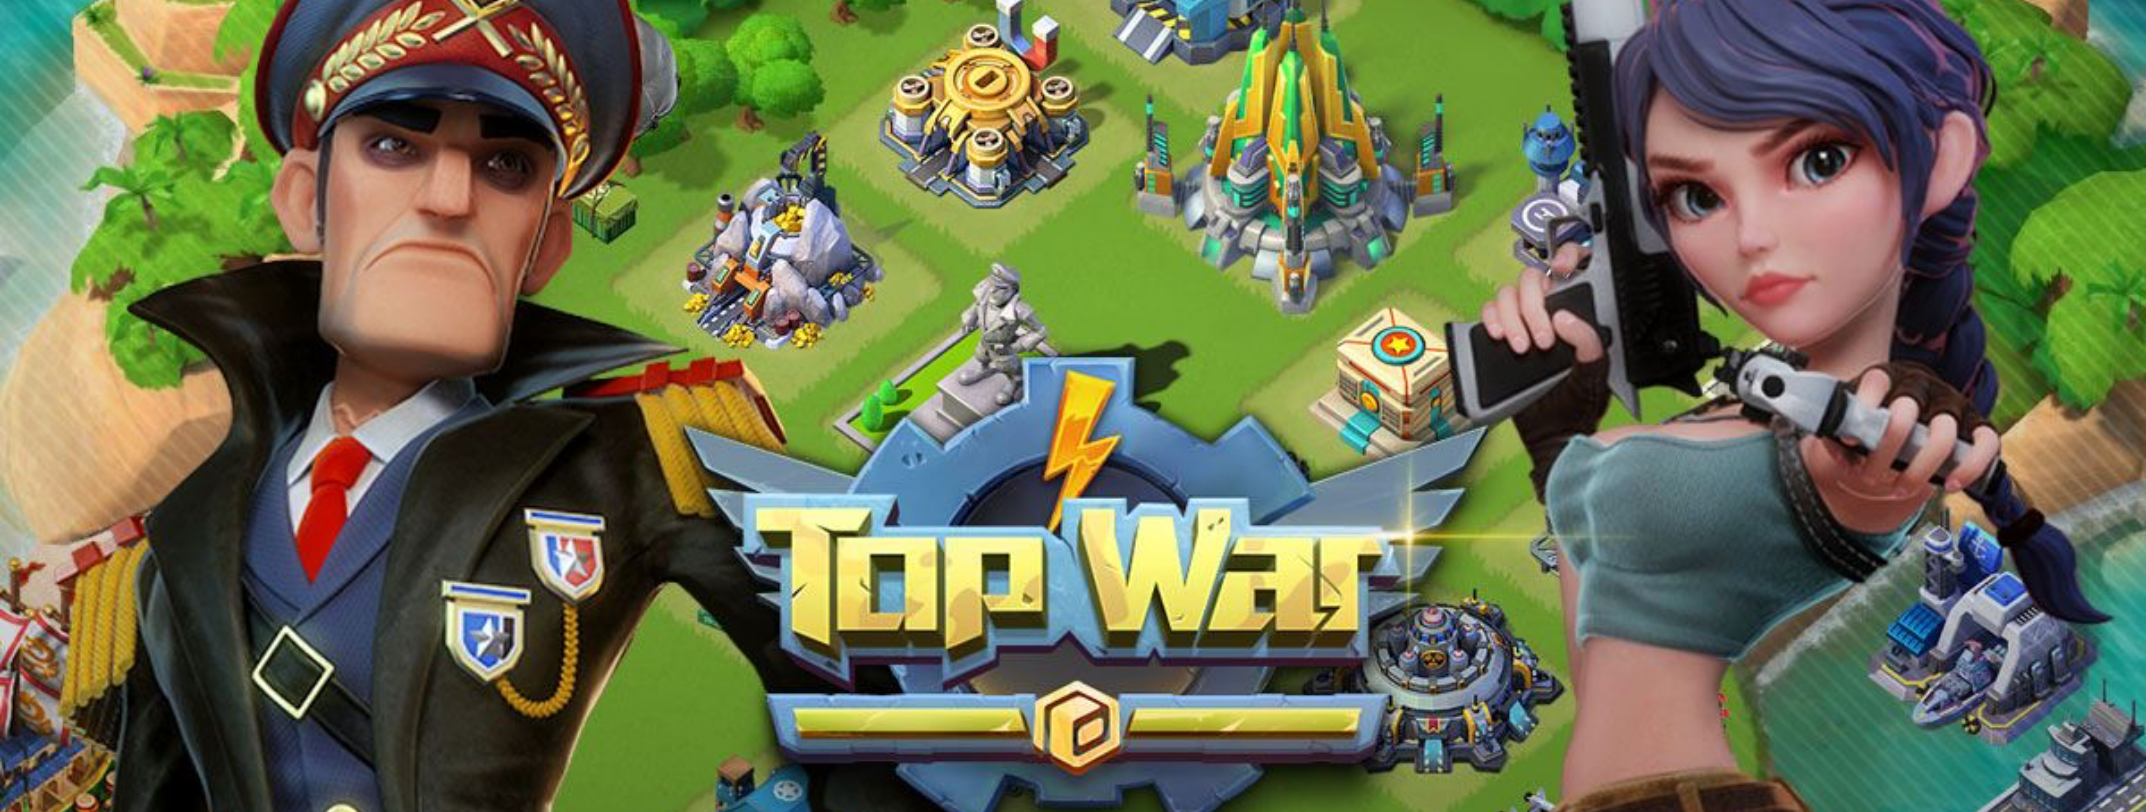 Top War: Battle Game deconstruction header image